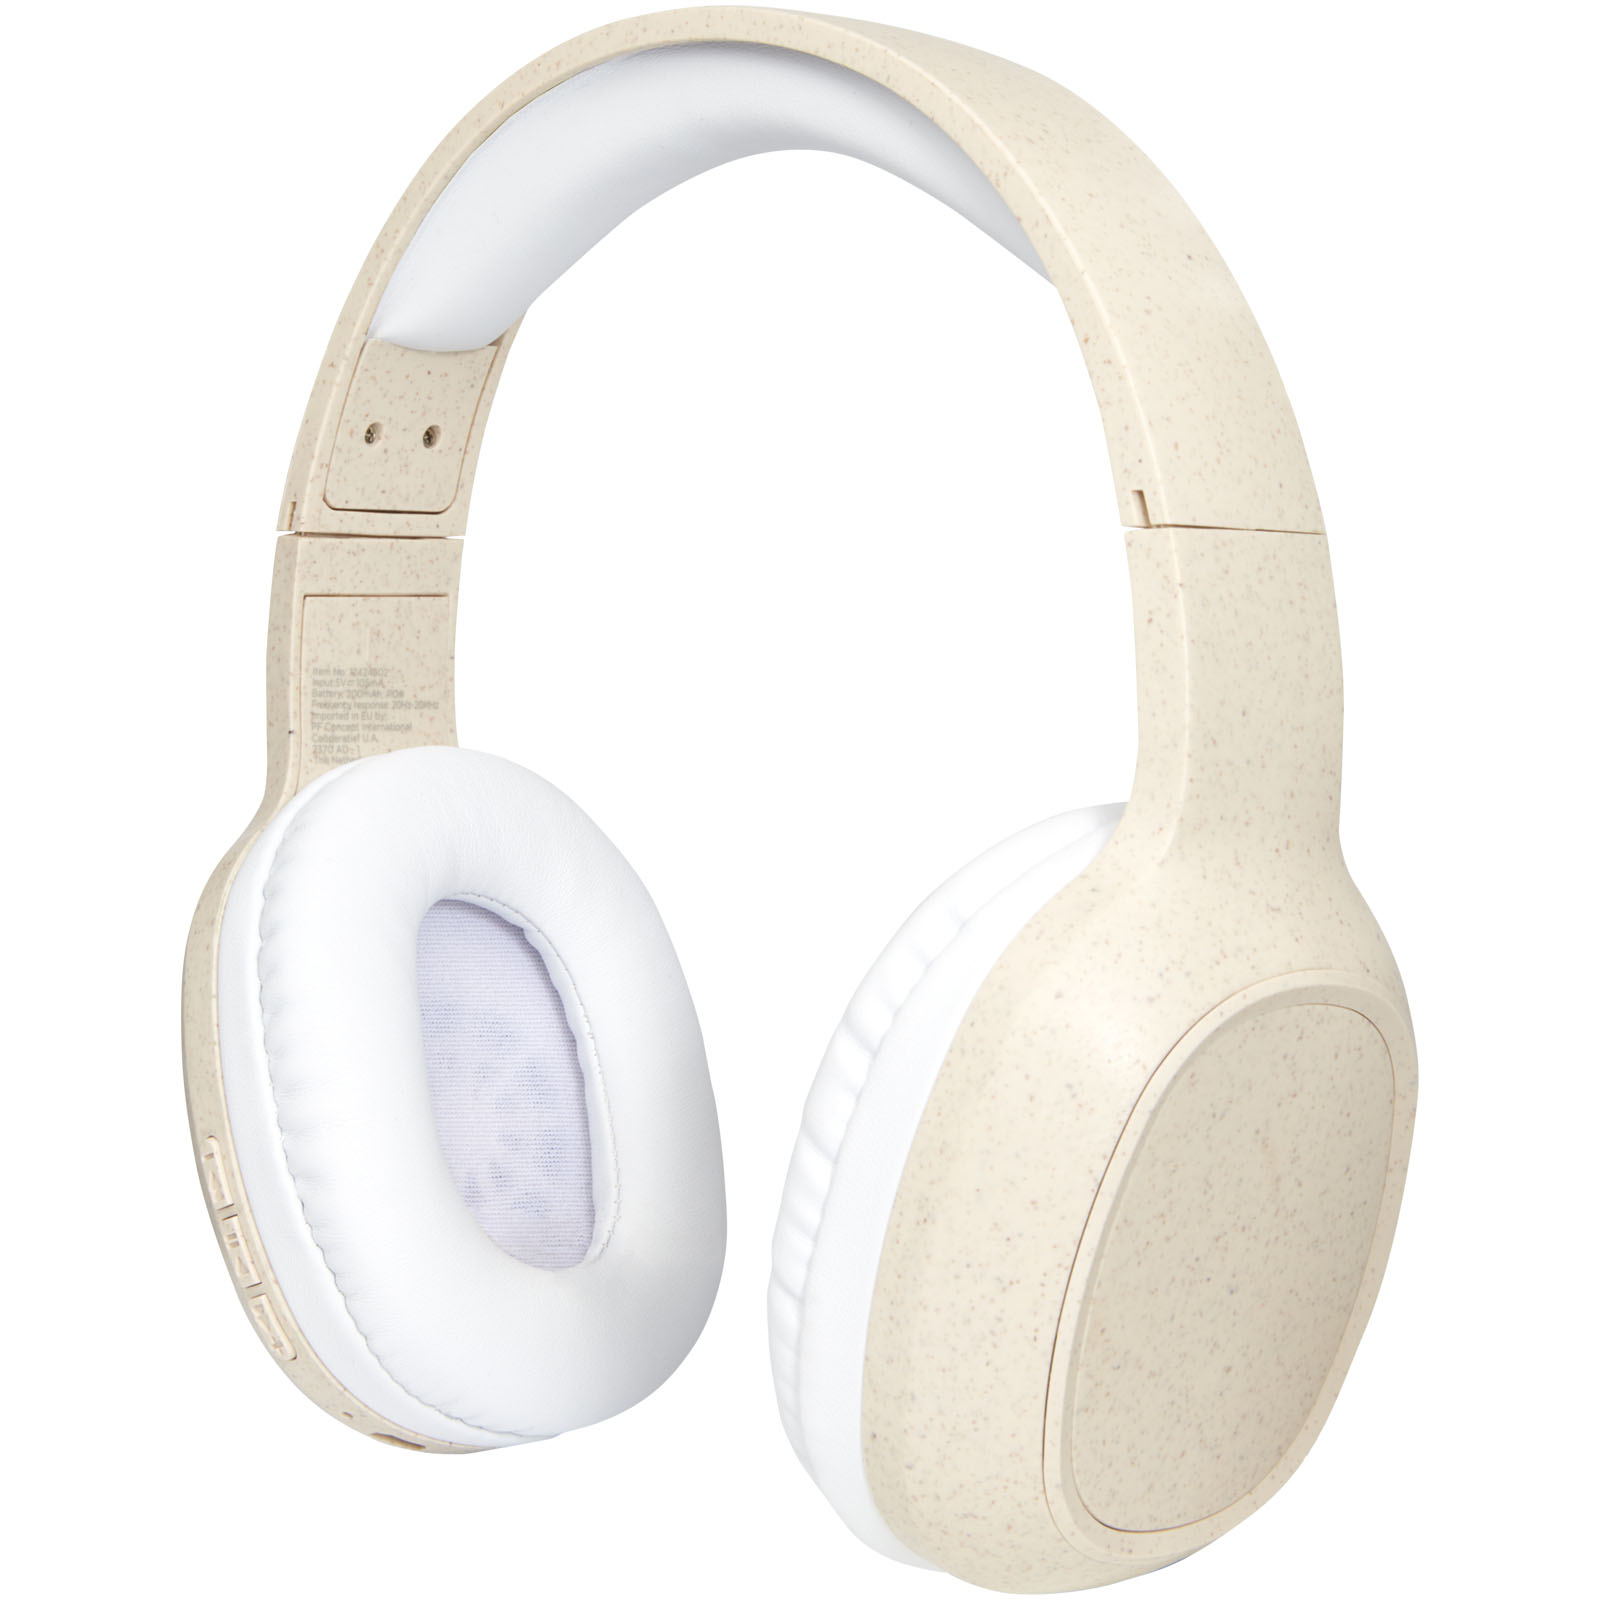 Headphones - Riff wheat straw Bluetooth® headphones with microphone